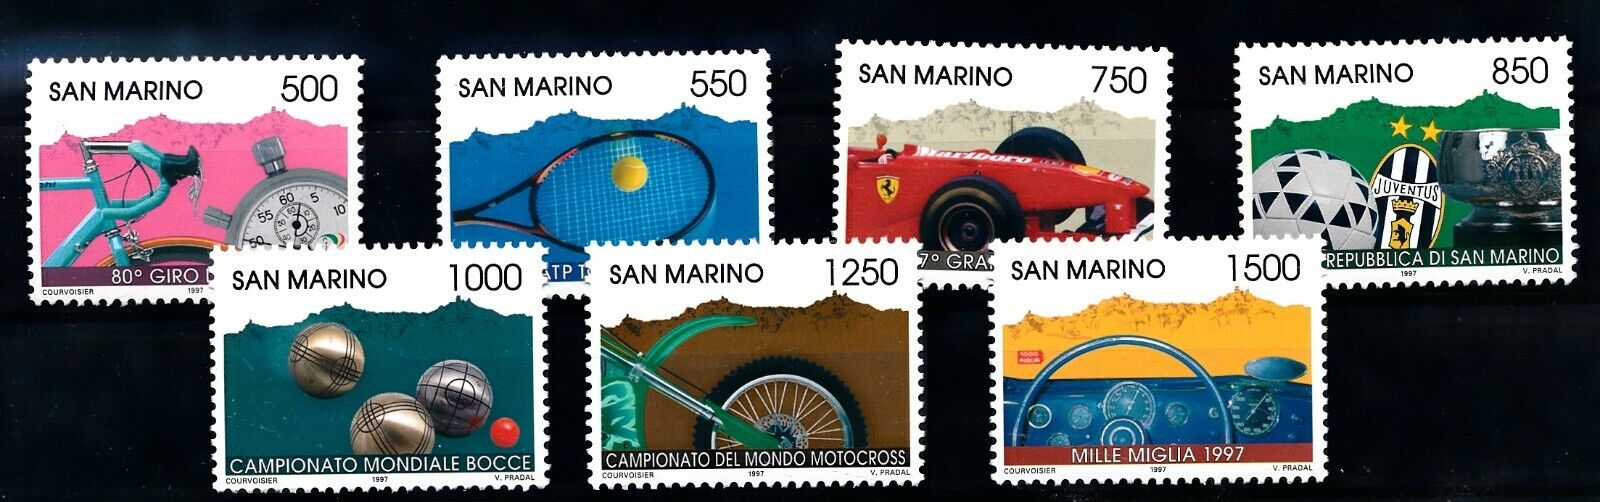 [i6425] San Marino 1997 Cycling Tennis Etc Good Set Very Fine Mnh Stamps